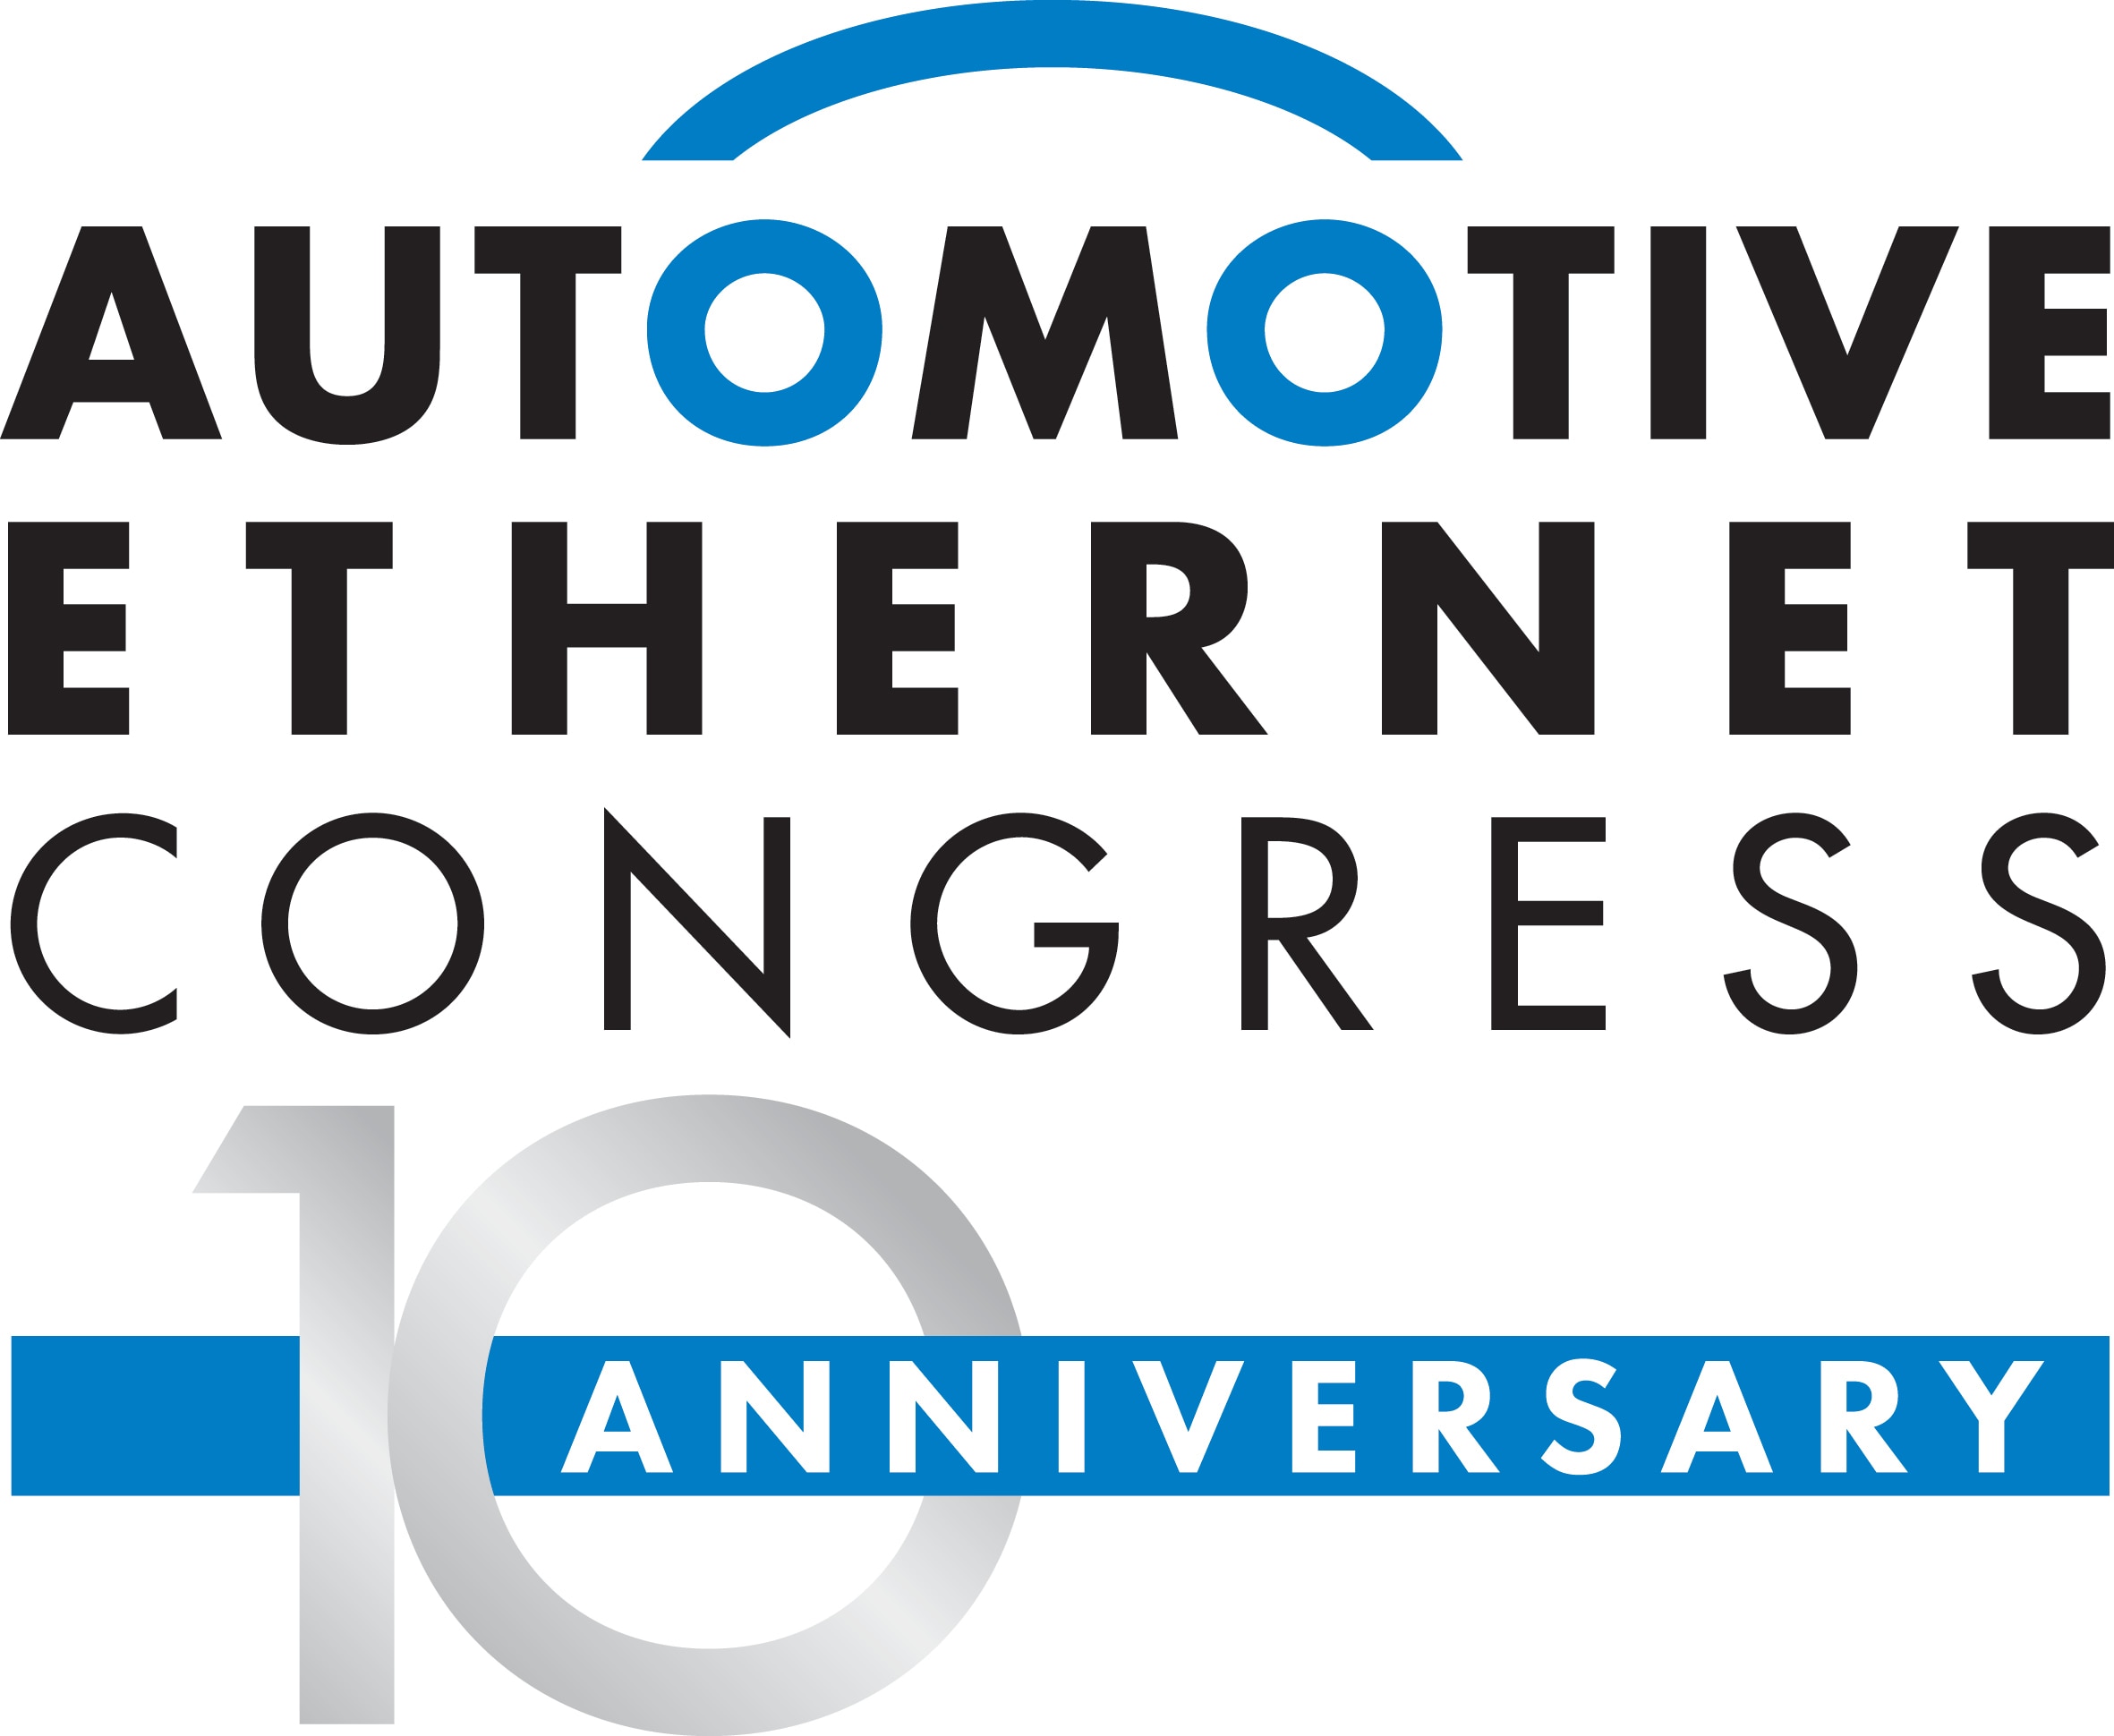 Automotive Ethernet Congress logo